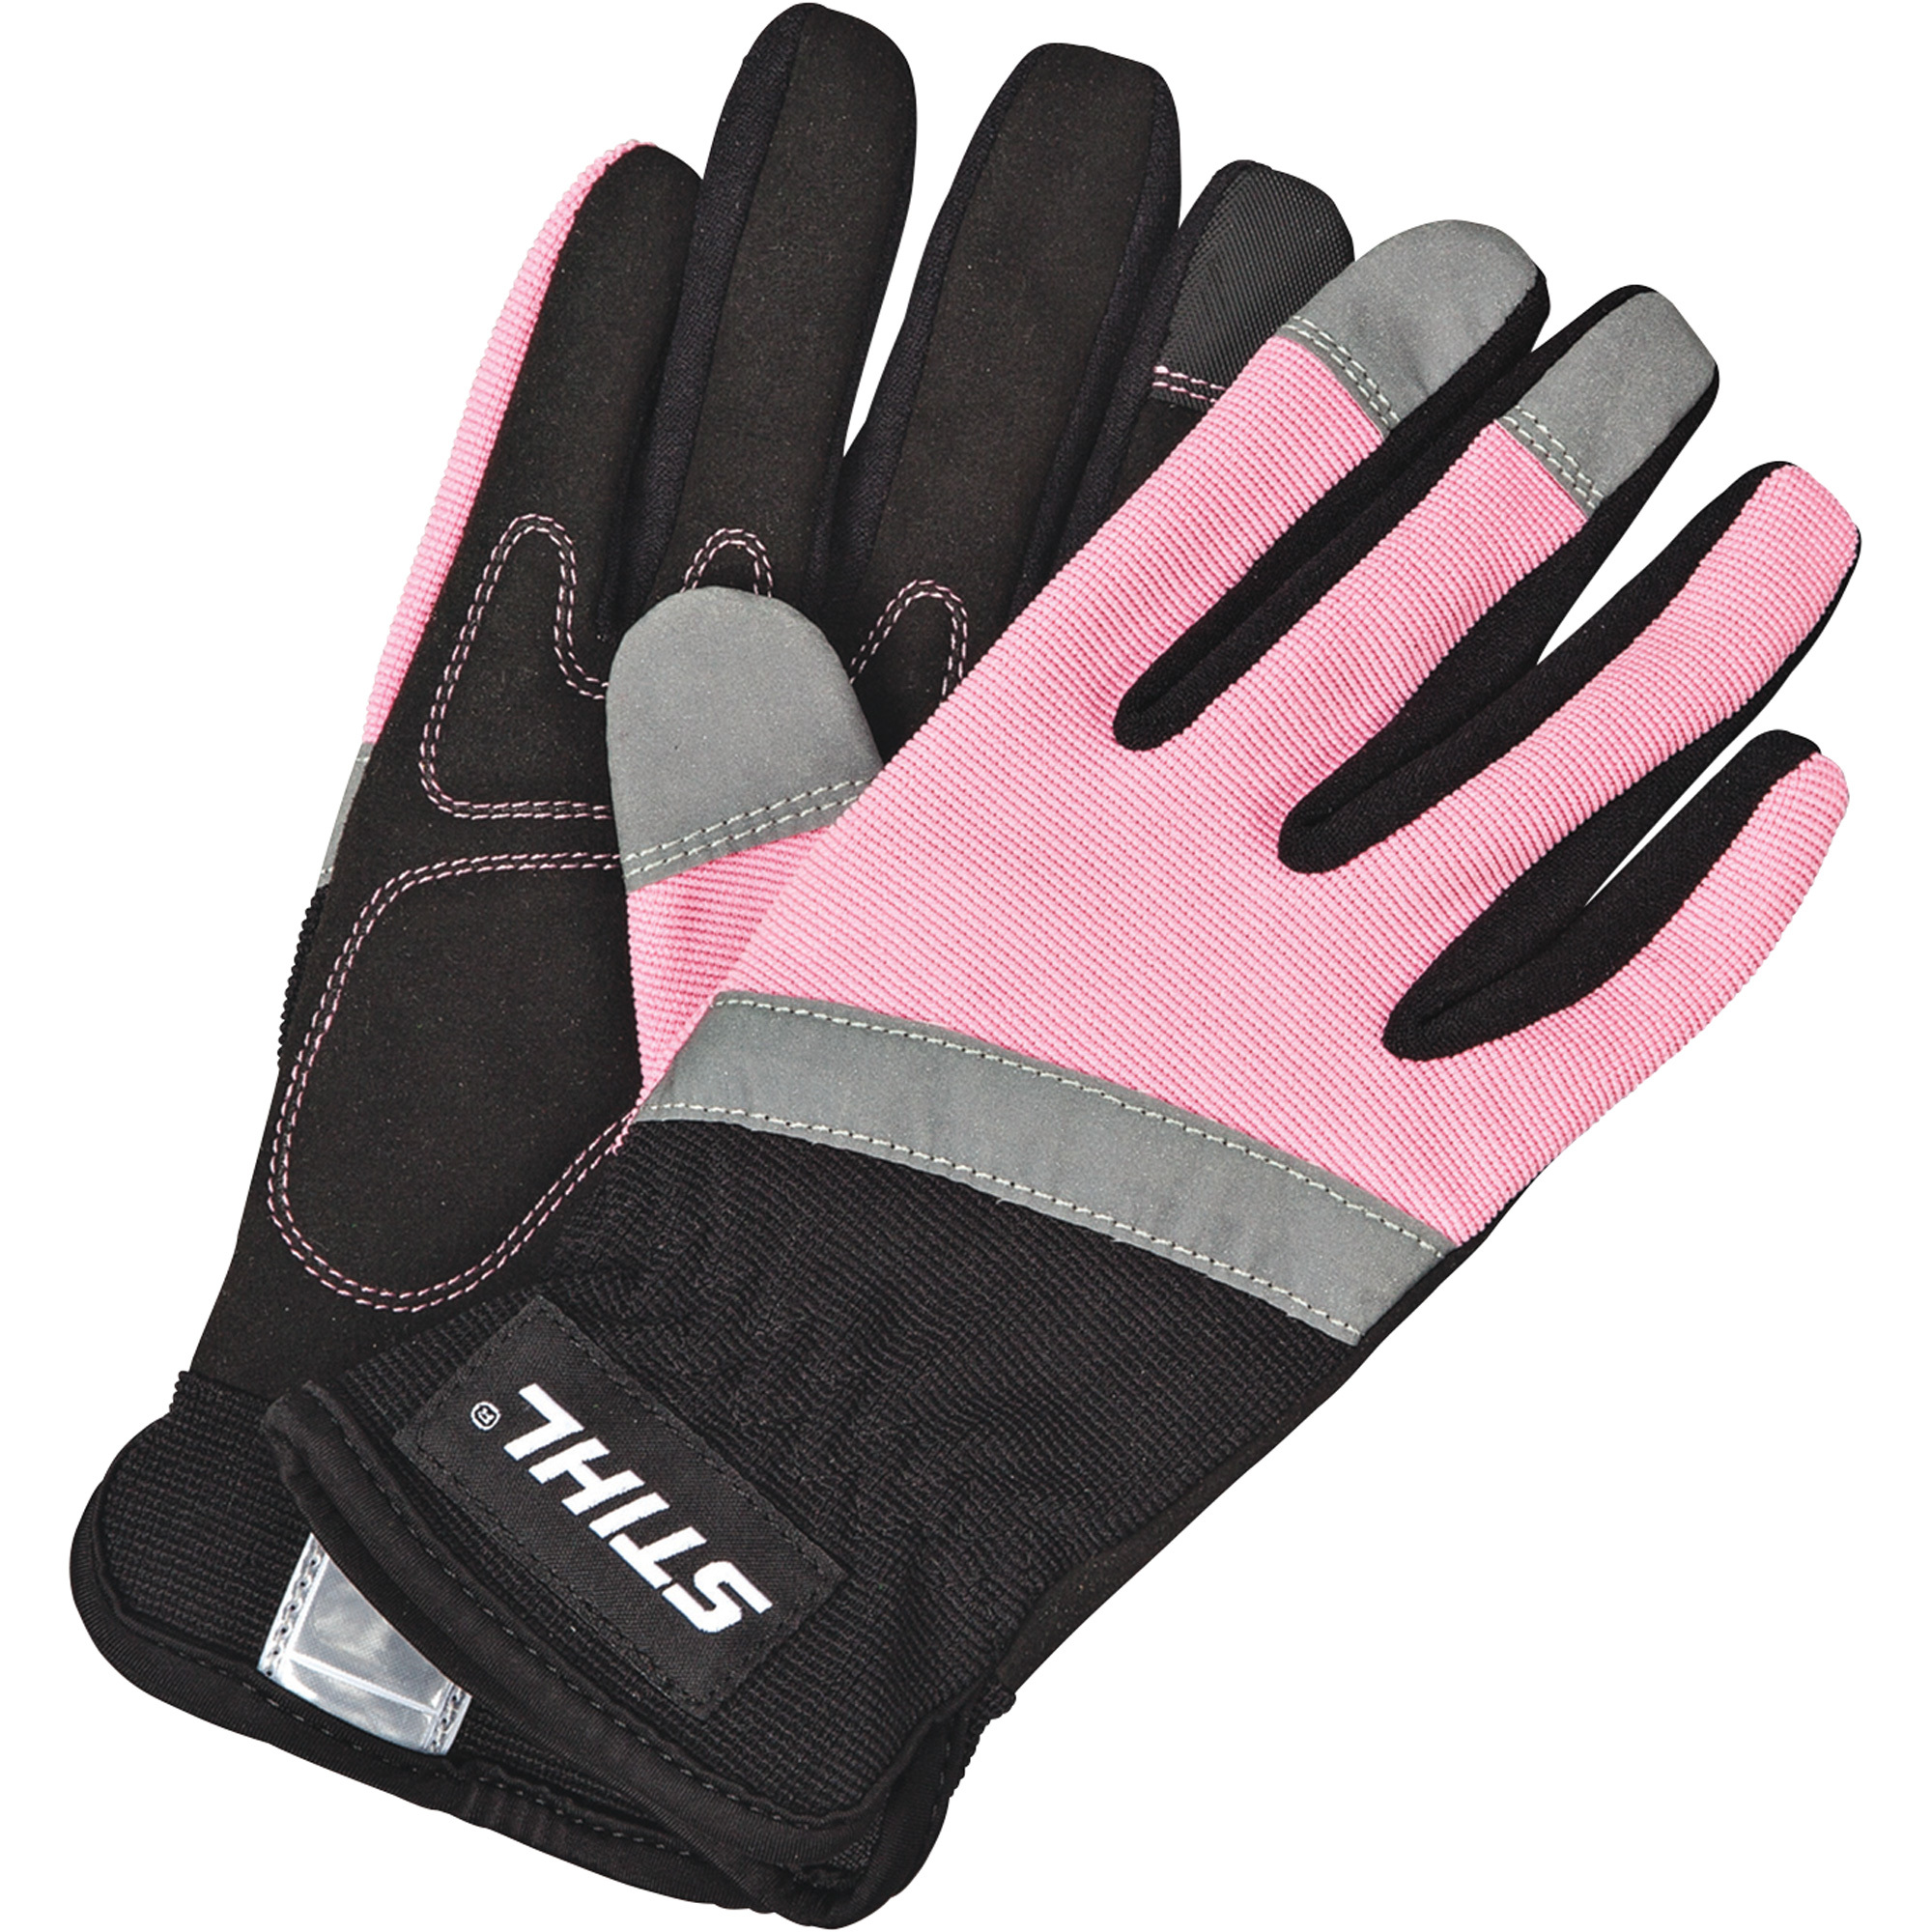 STIHL Cotton Candy Work Gloves, M Size, Pink/Black, Model 7010 884 1153